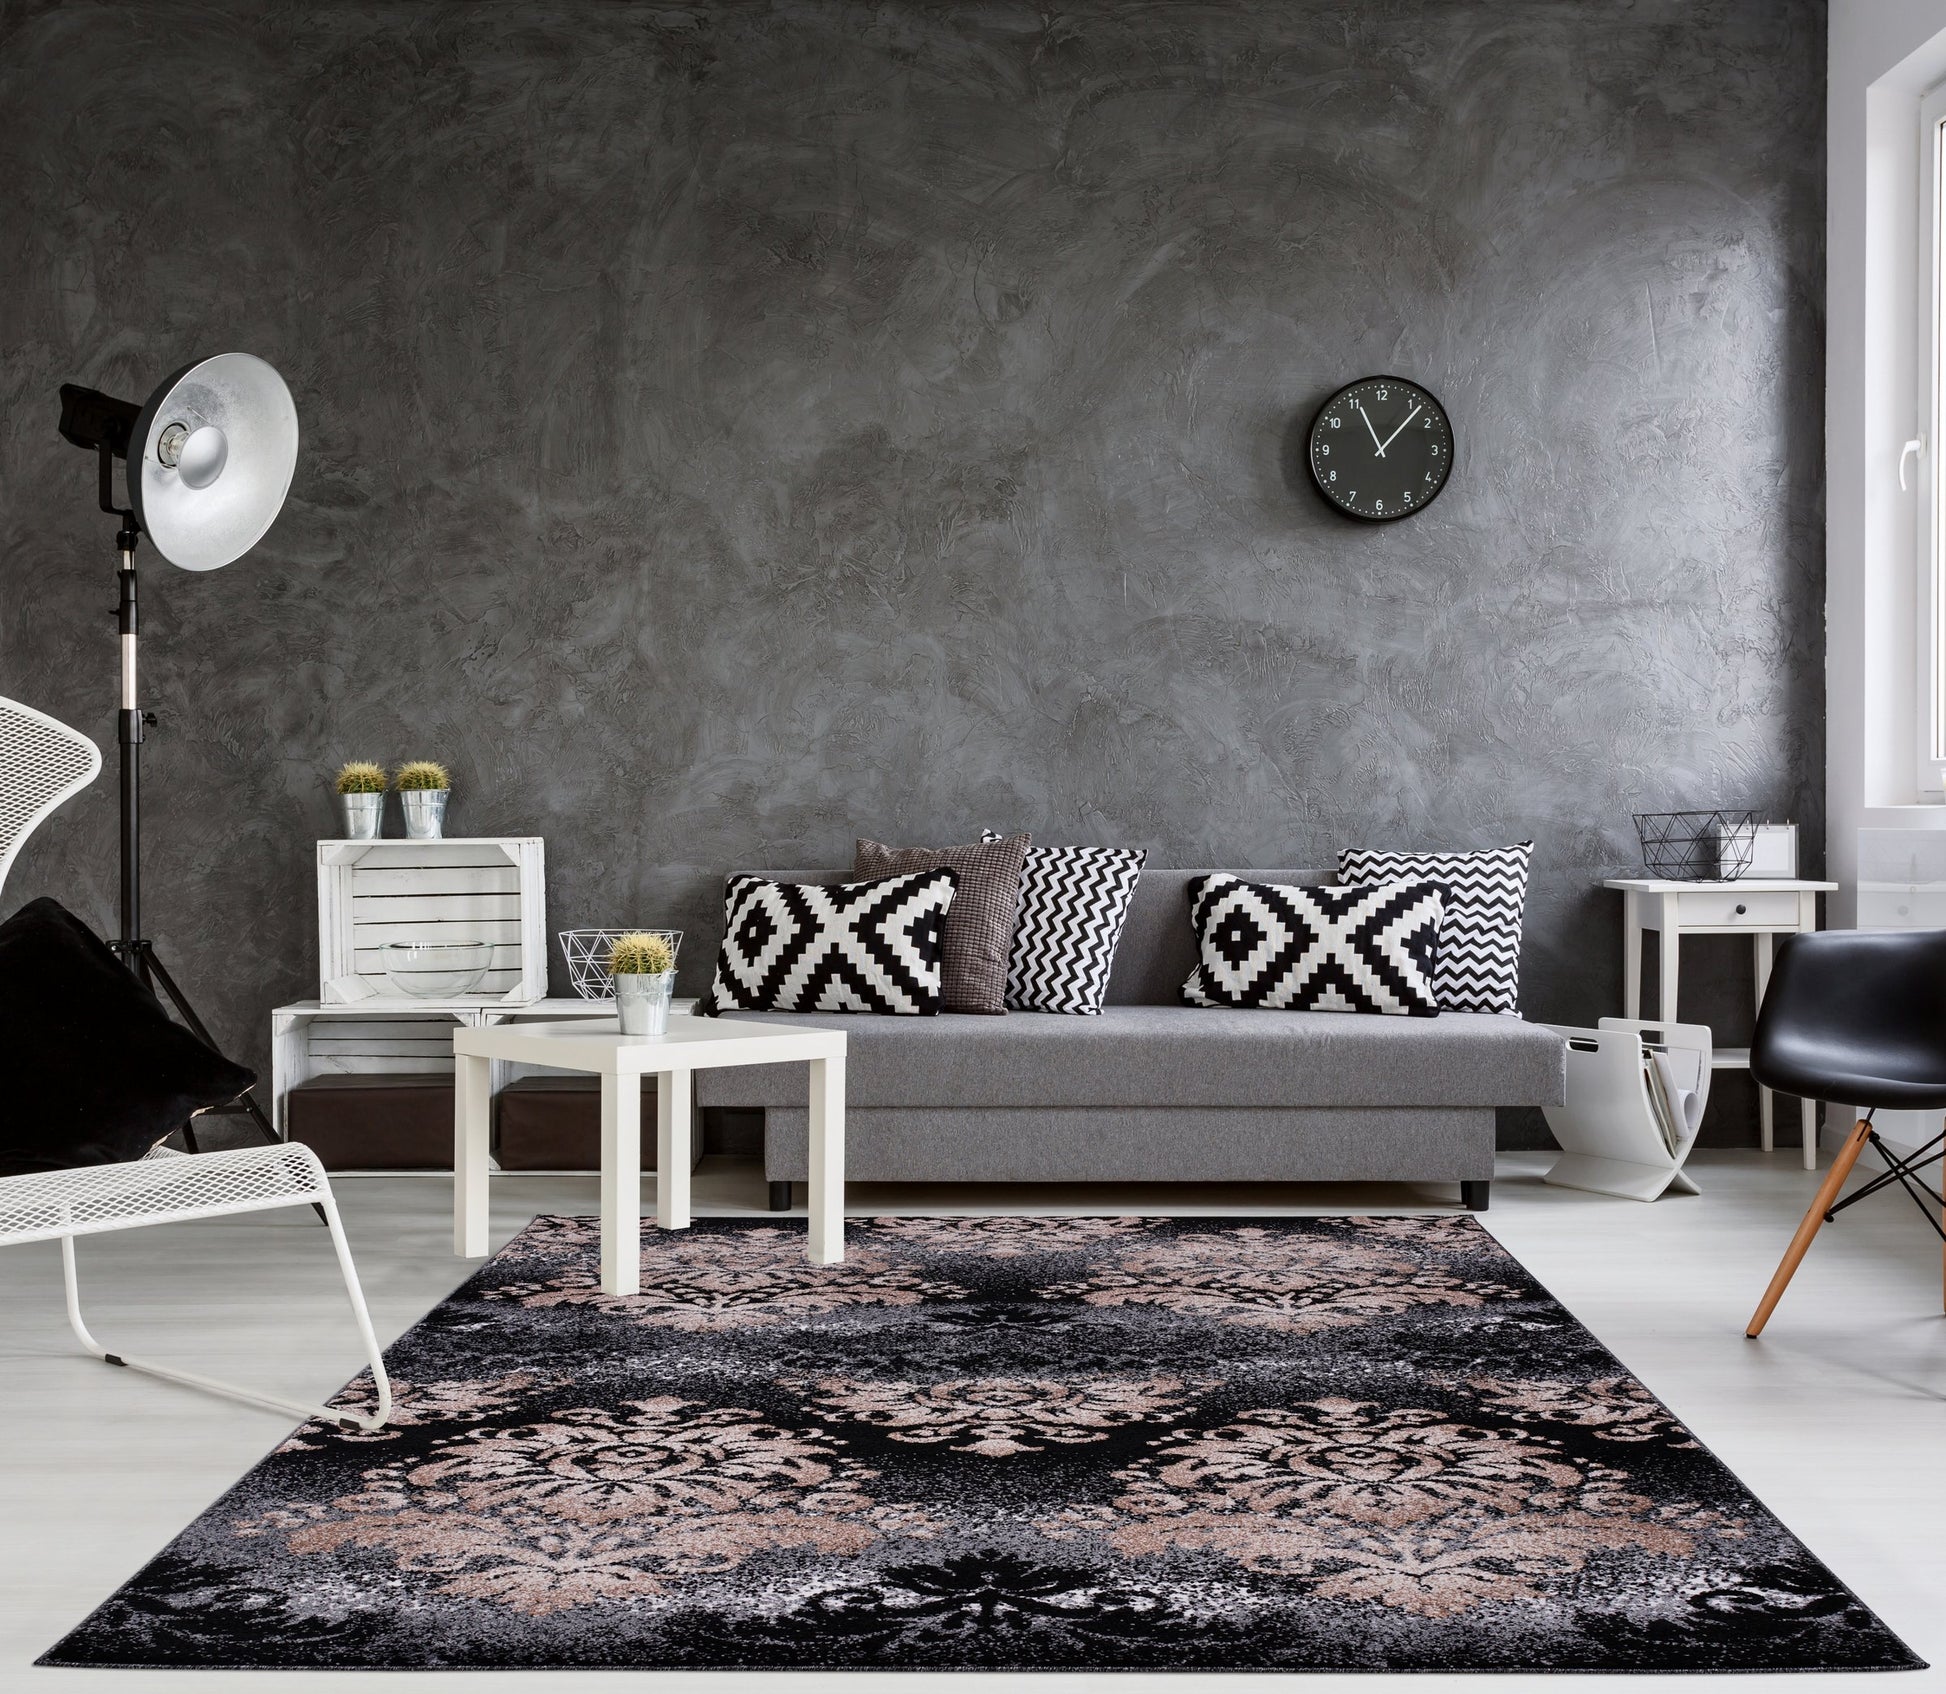 milan black gold damask area rug 4x6, 4x5 ft Small Carpet, Home Office, Living Room, Bedroom